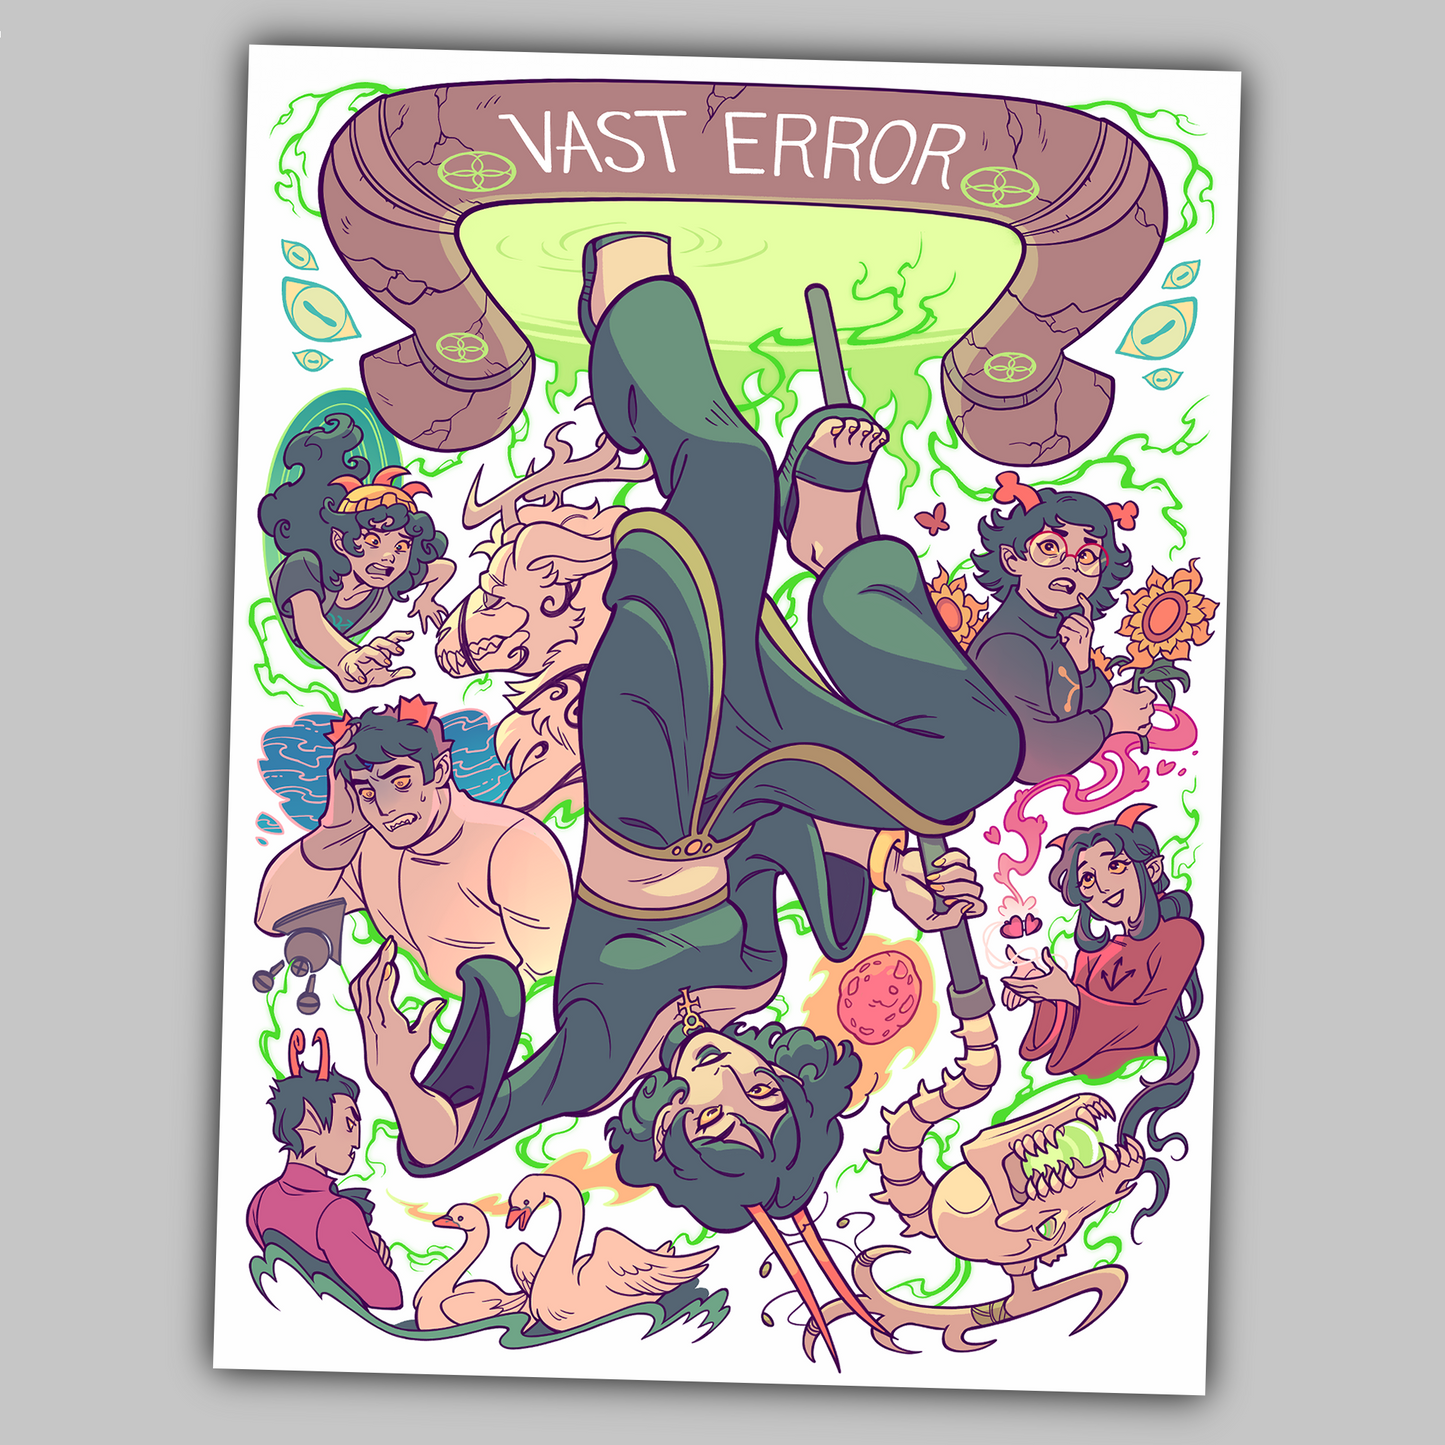 "Vast Error — Act Two" Art Print